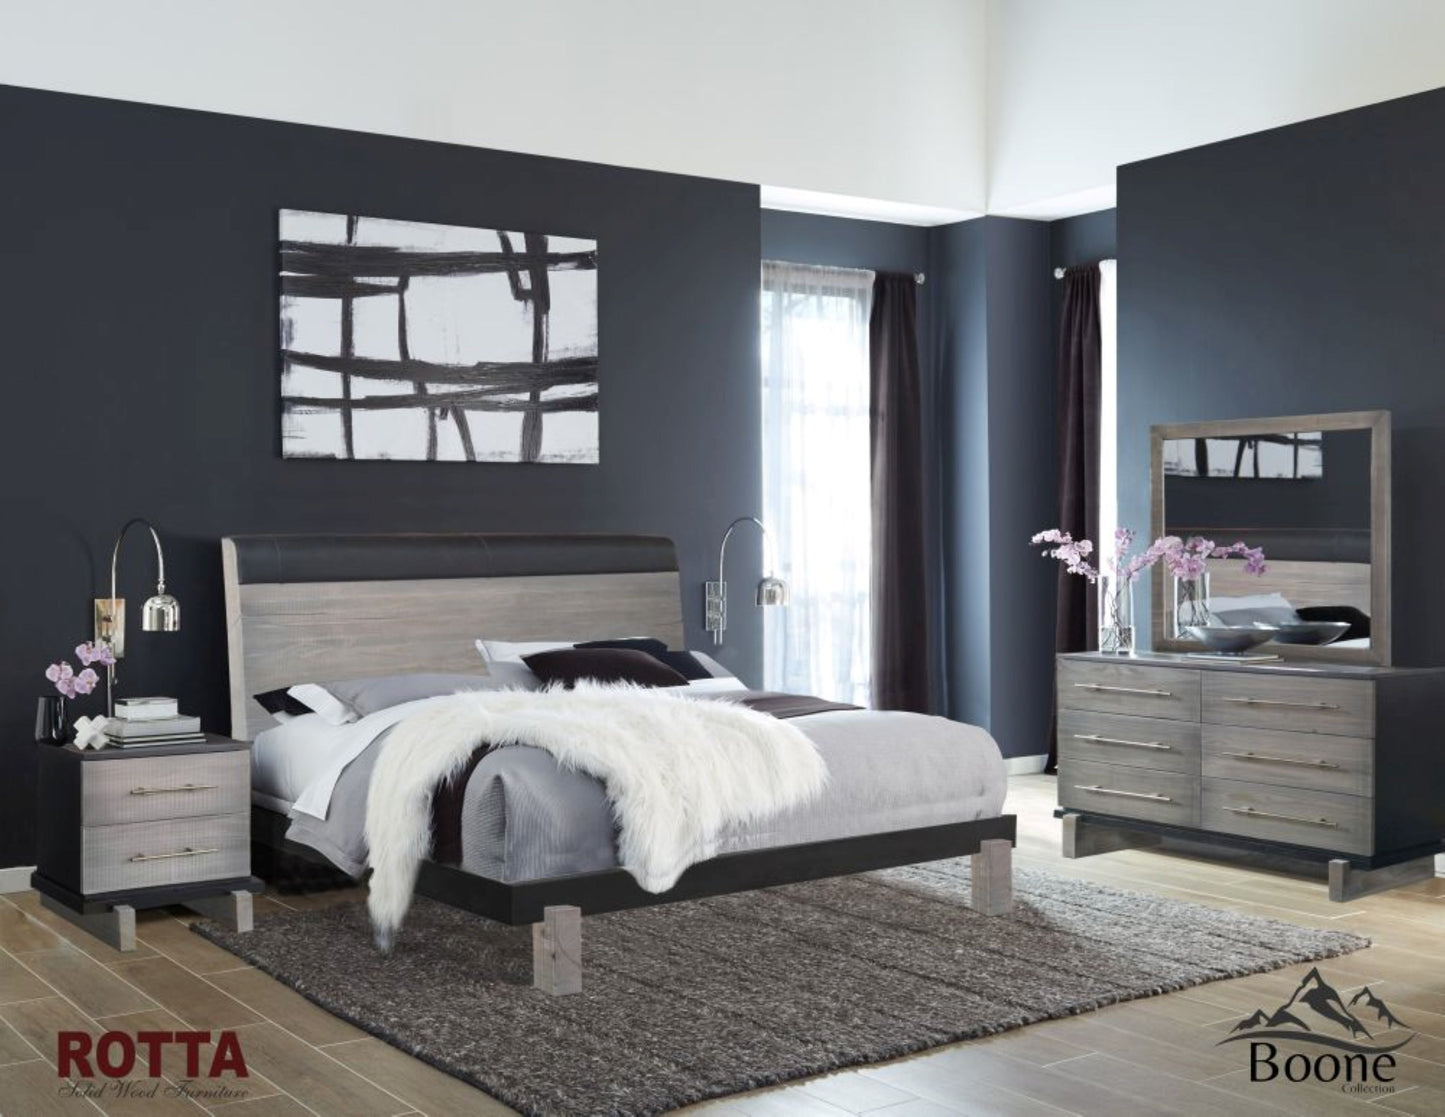 Rotta Solid Wood Boone Bedroom